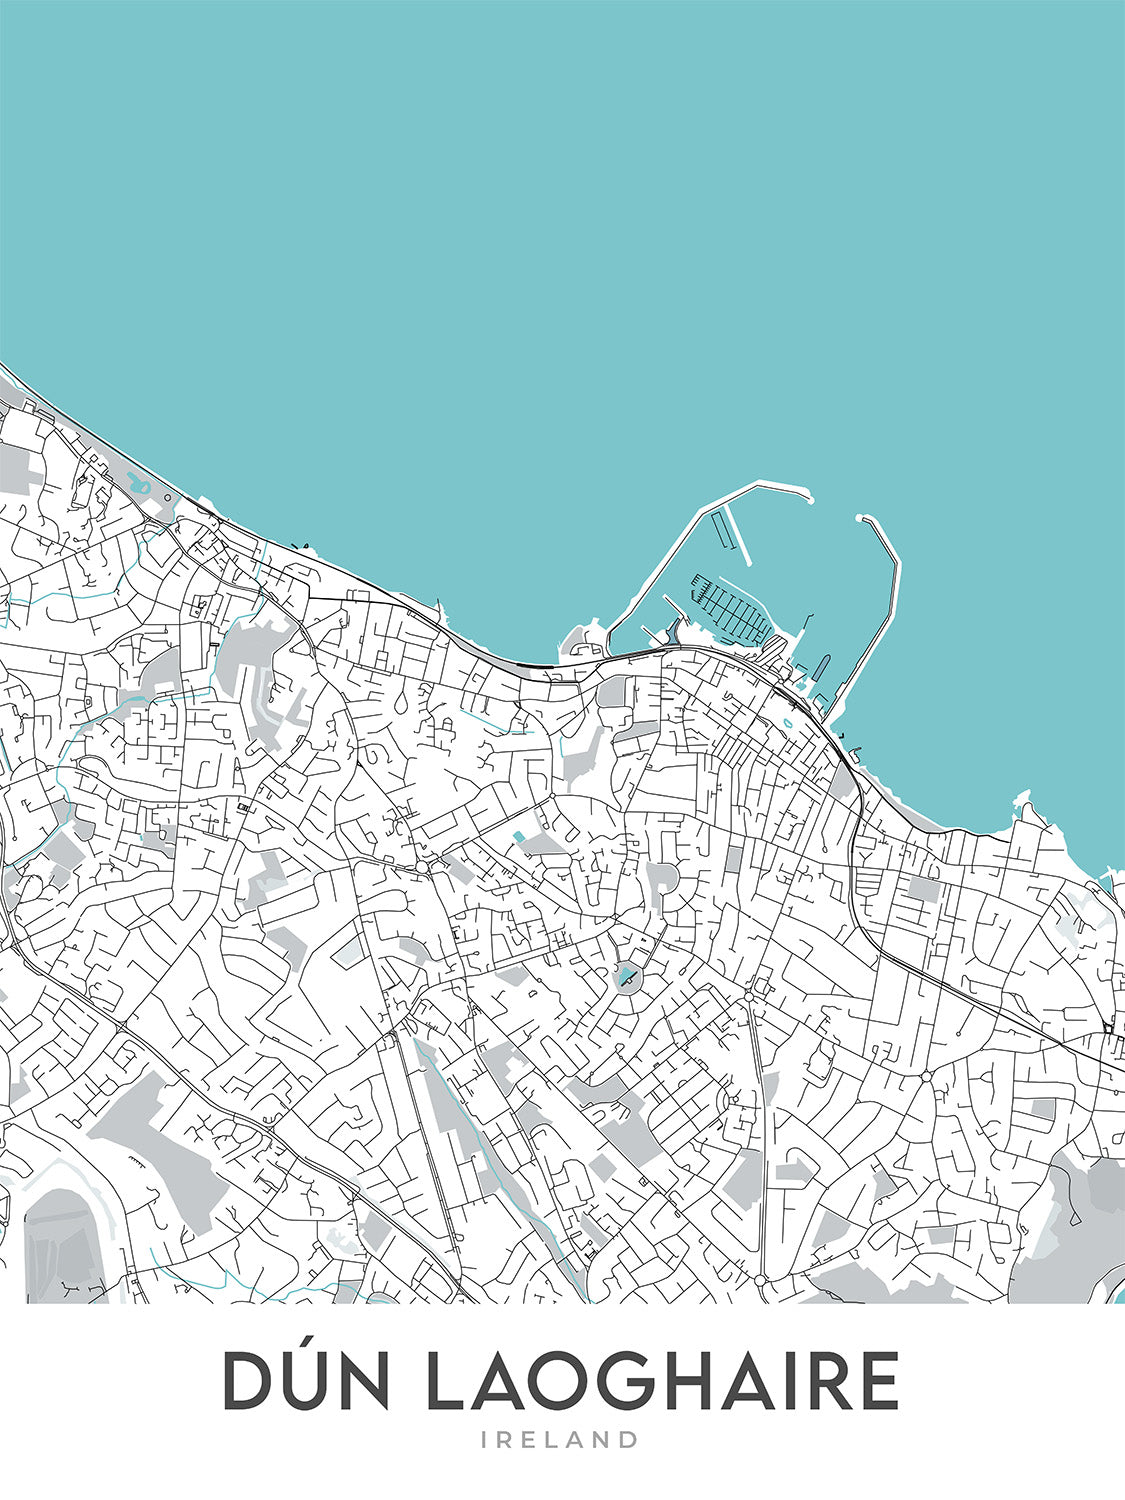 Mapa moderno de la ciudad de Dún Laoghaire, Irlanda: Puerto de Dún Laoghaire, Sandycove, Isla Dalkey, Killiney Hill, N11